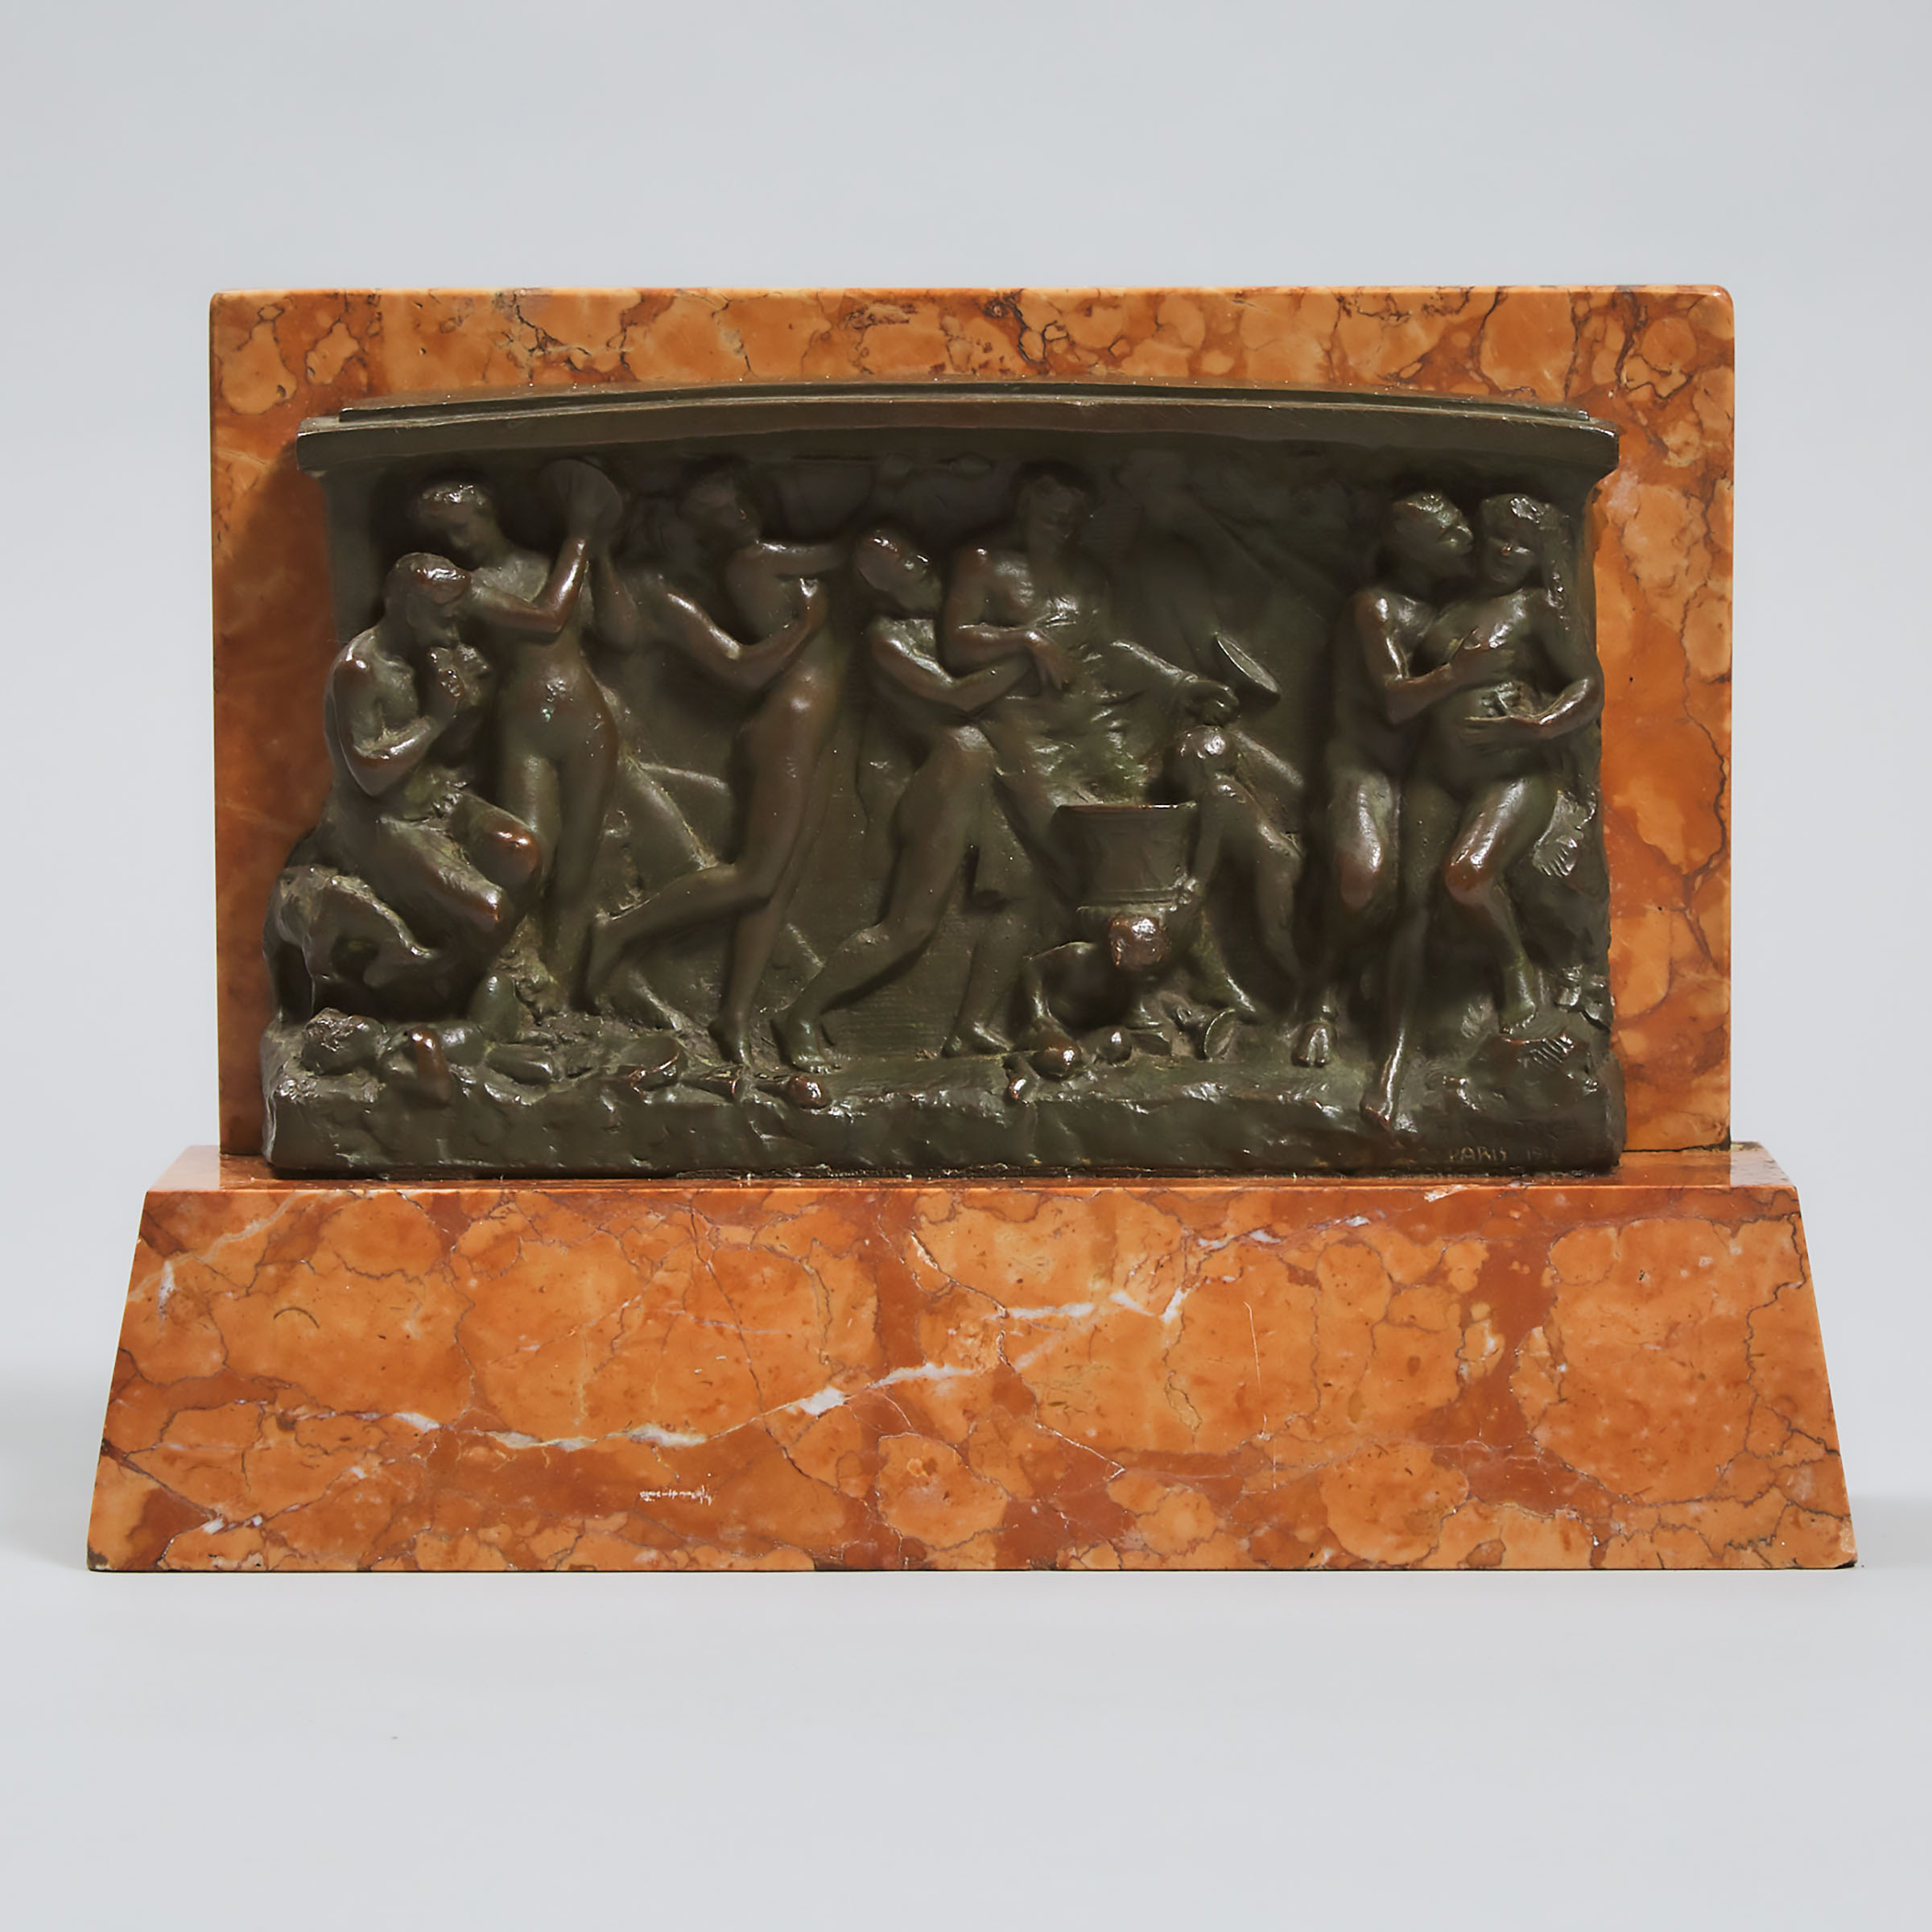 Neoclassical Bronze Relief Panel Depicting Bacchanalian Figures in Revelry, by Heinrich Kautsch (Austrian/Czeck 1859-1943), 1910